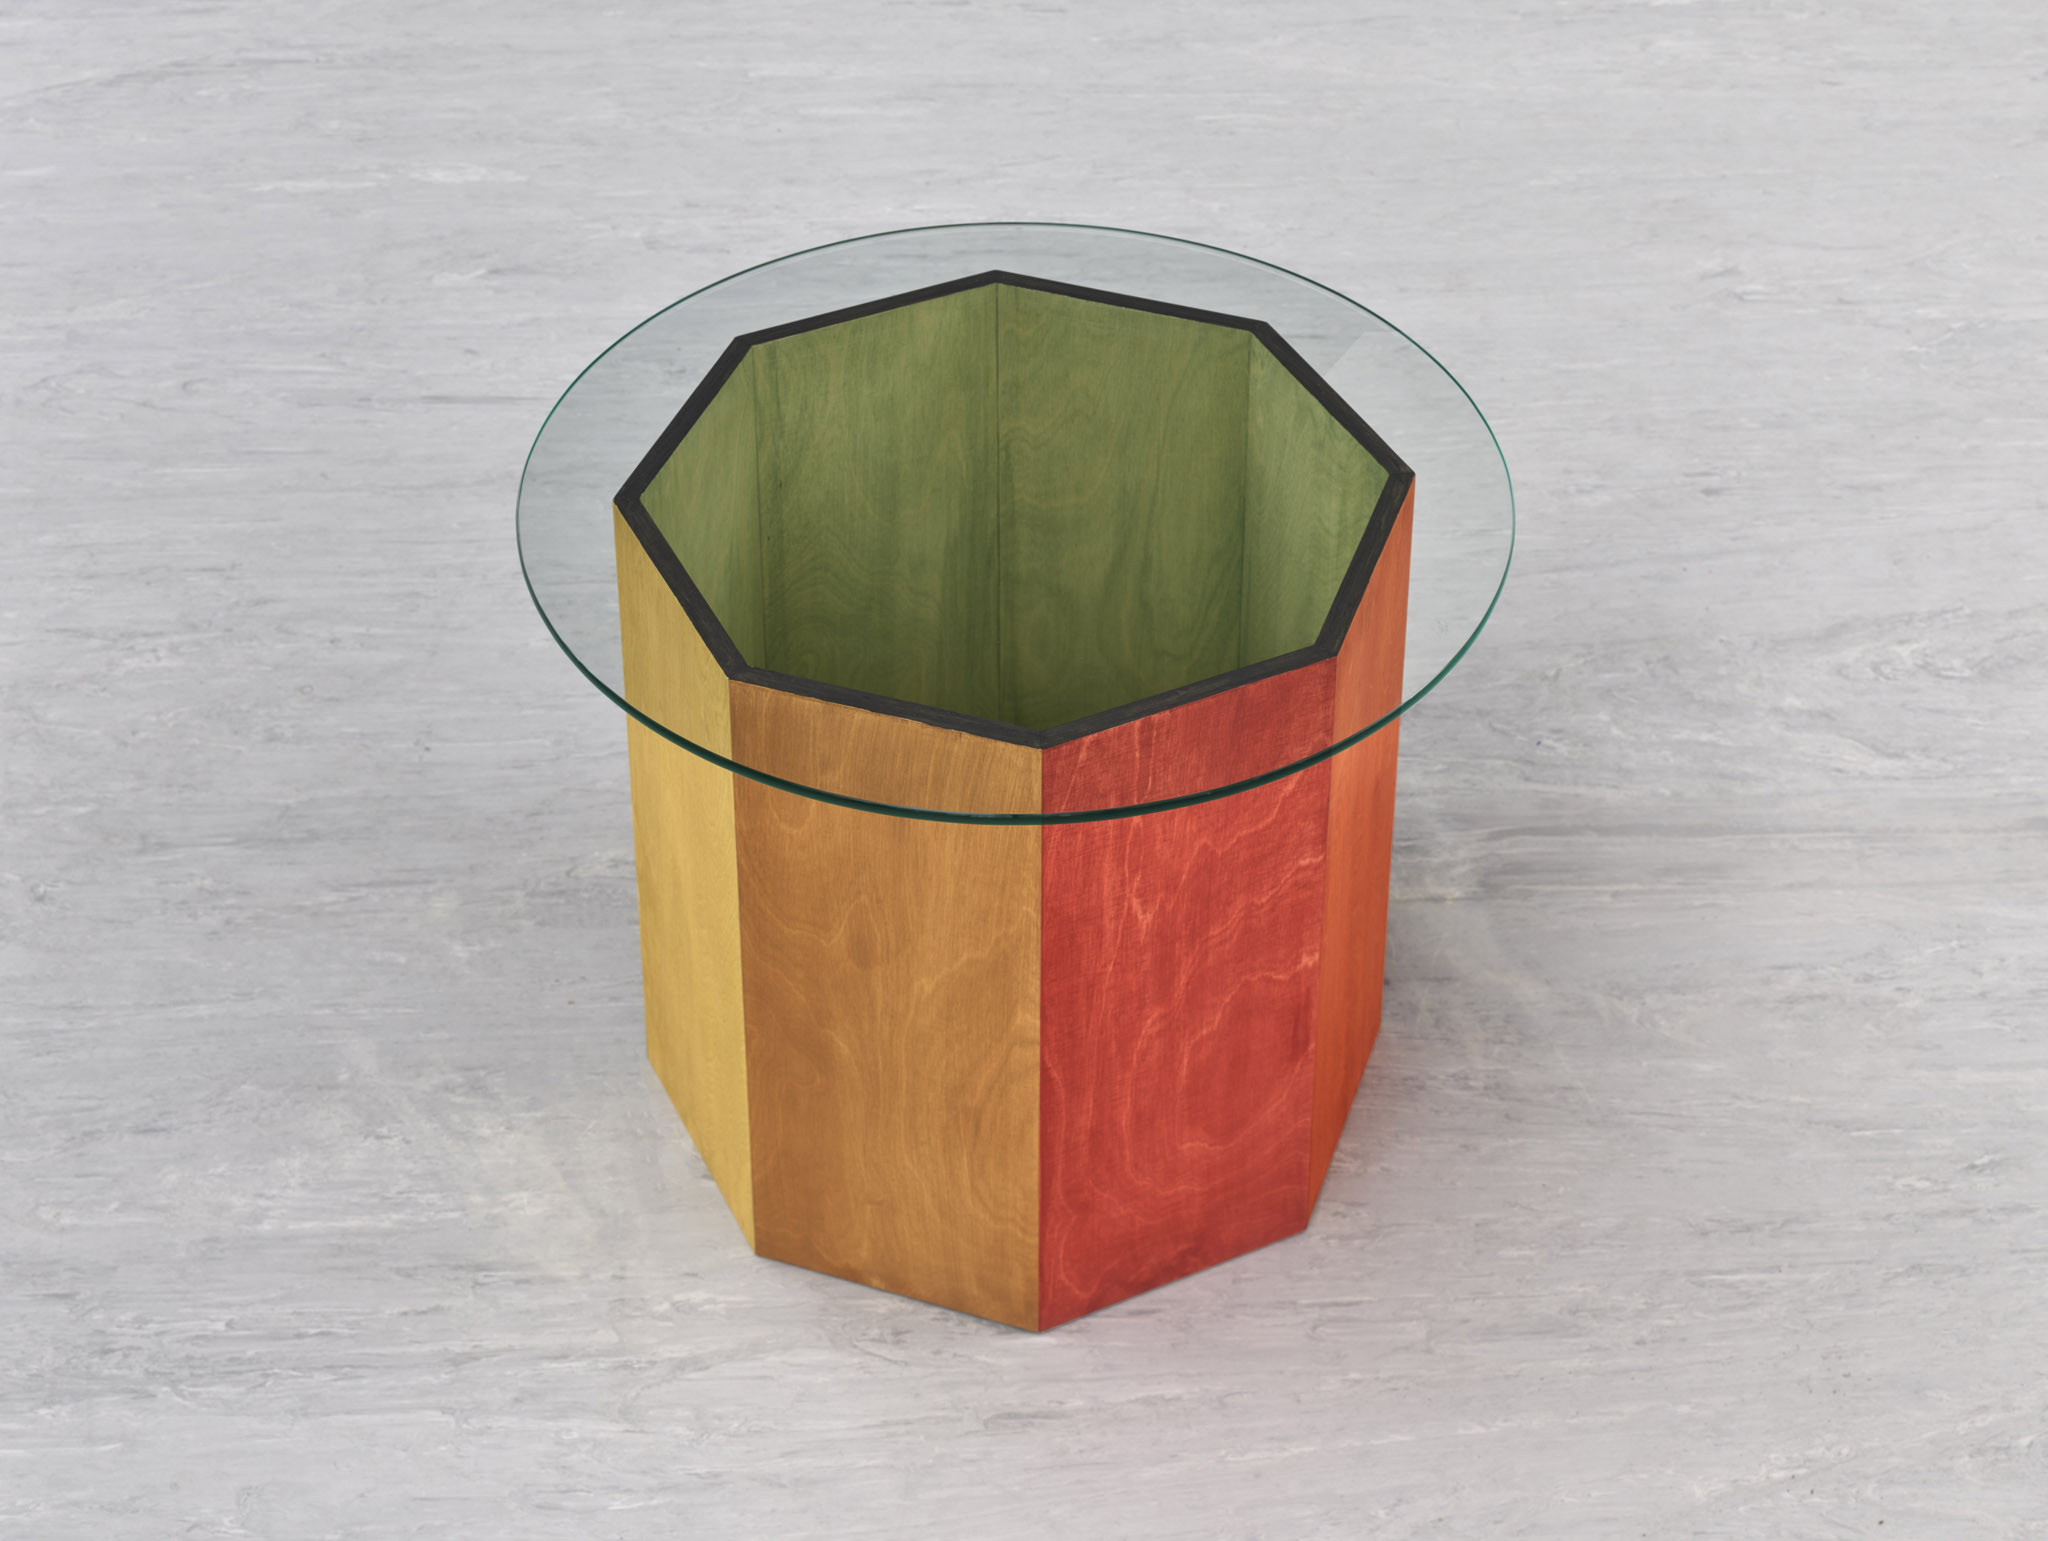 Sunah Choi, "Table Octagon", 2023, wood, color, glass, 60 x 46 x 60 cm